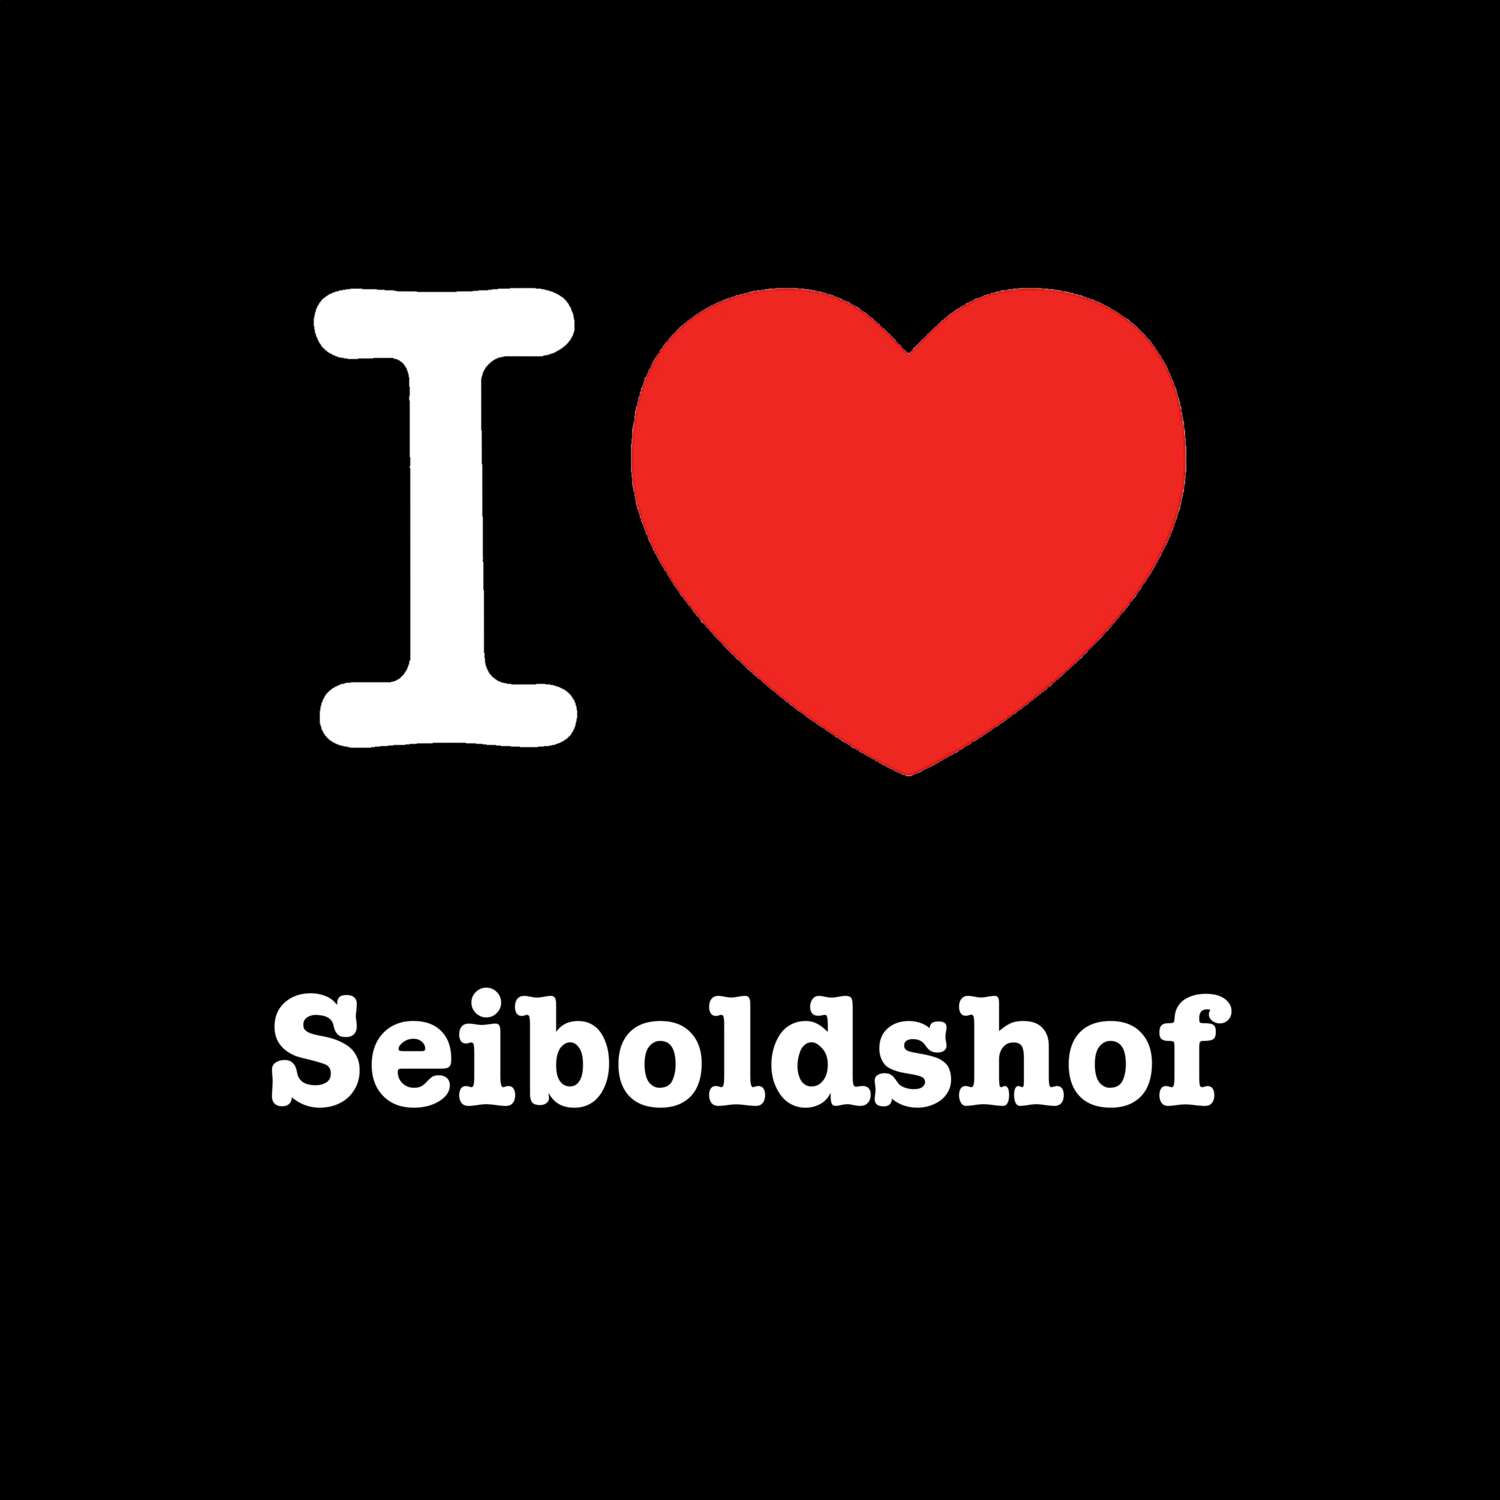 Seiboldshof T-Shirt »I love«